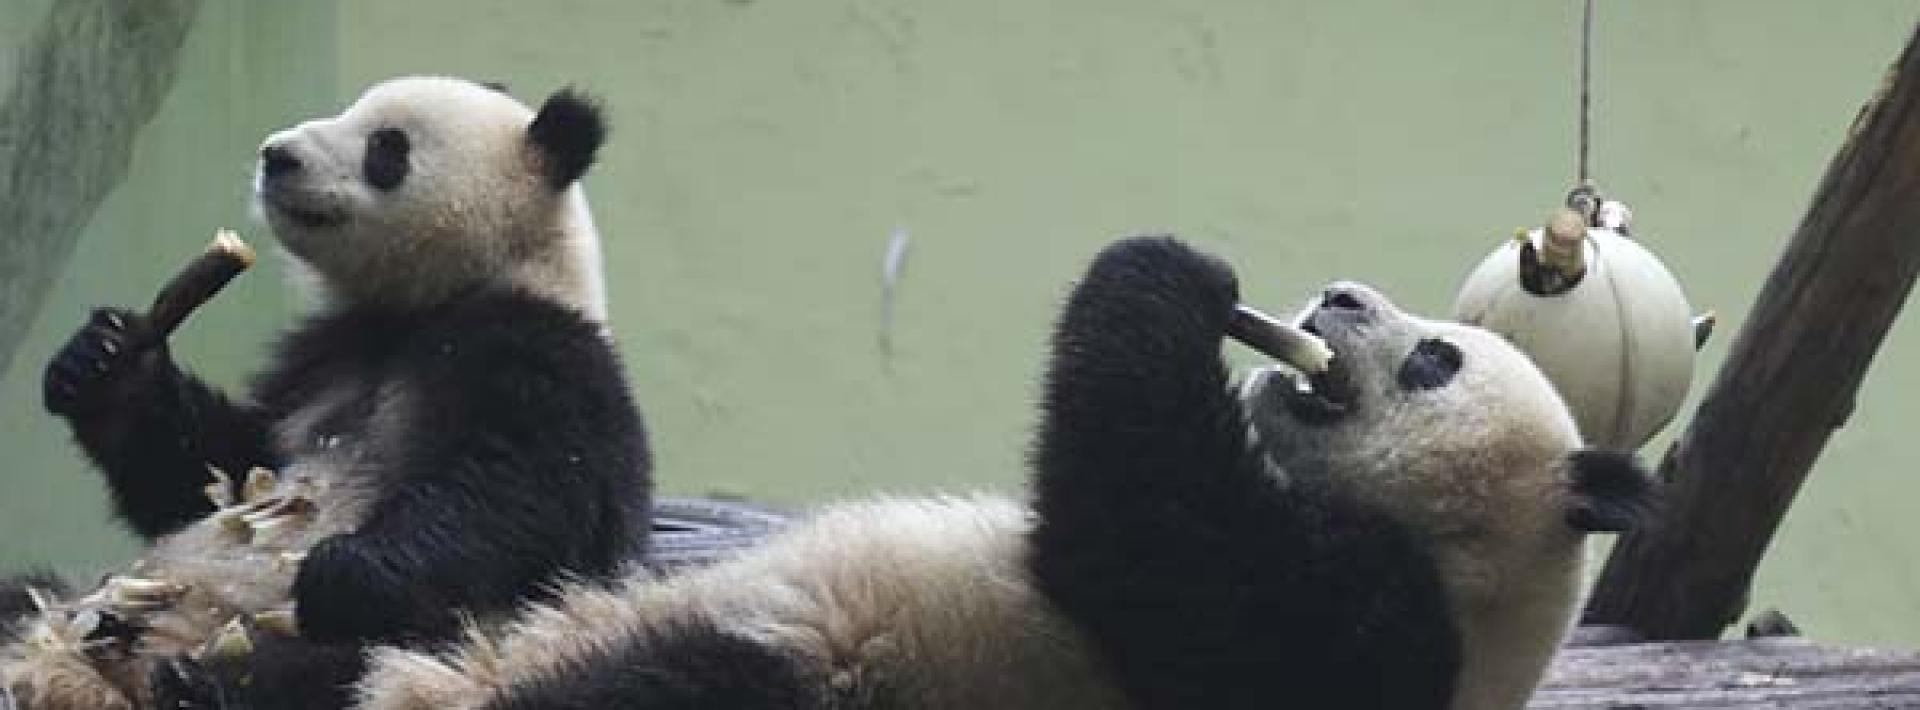 Giant Panda no longer endangered according to IUCN report